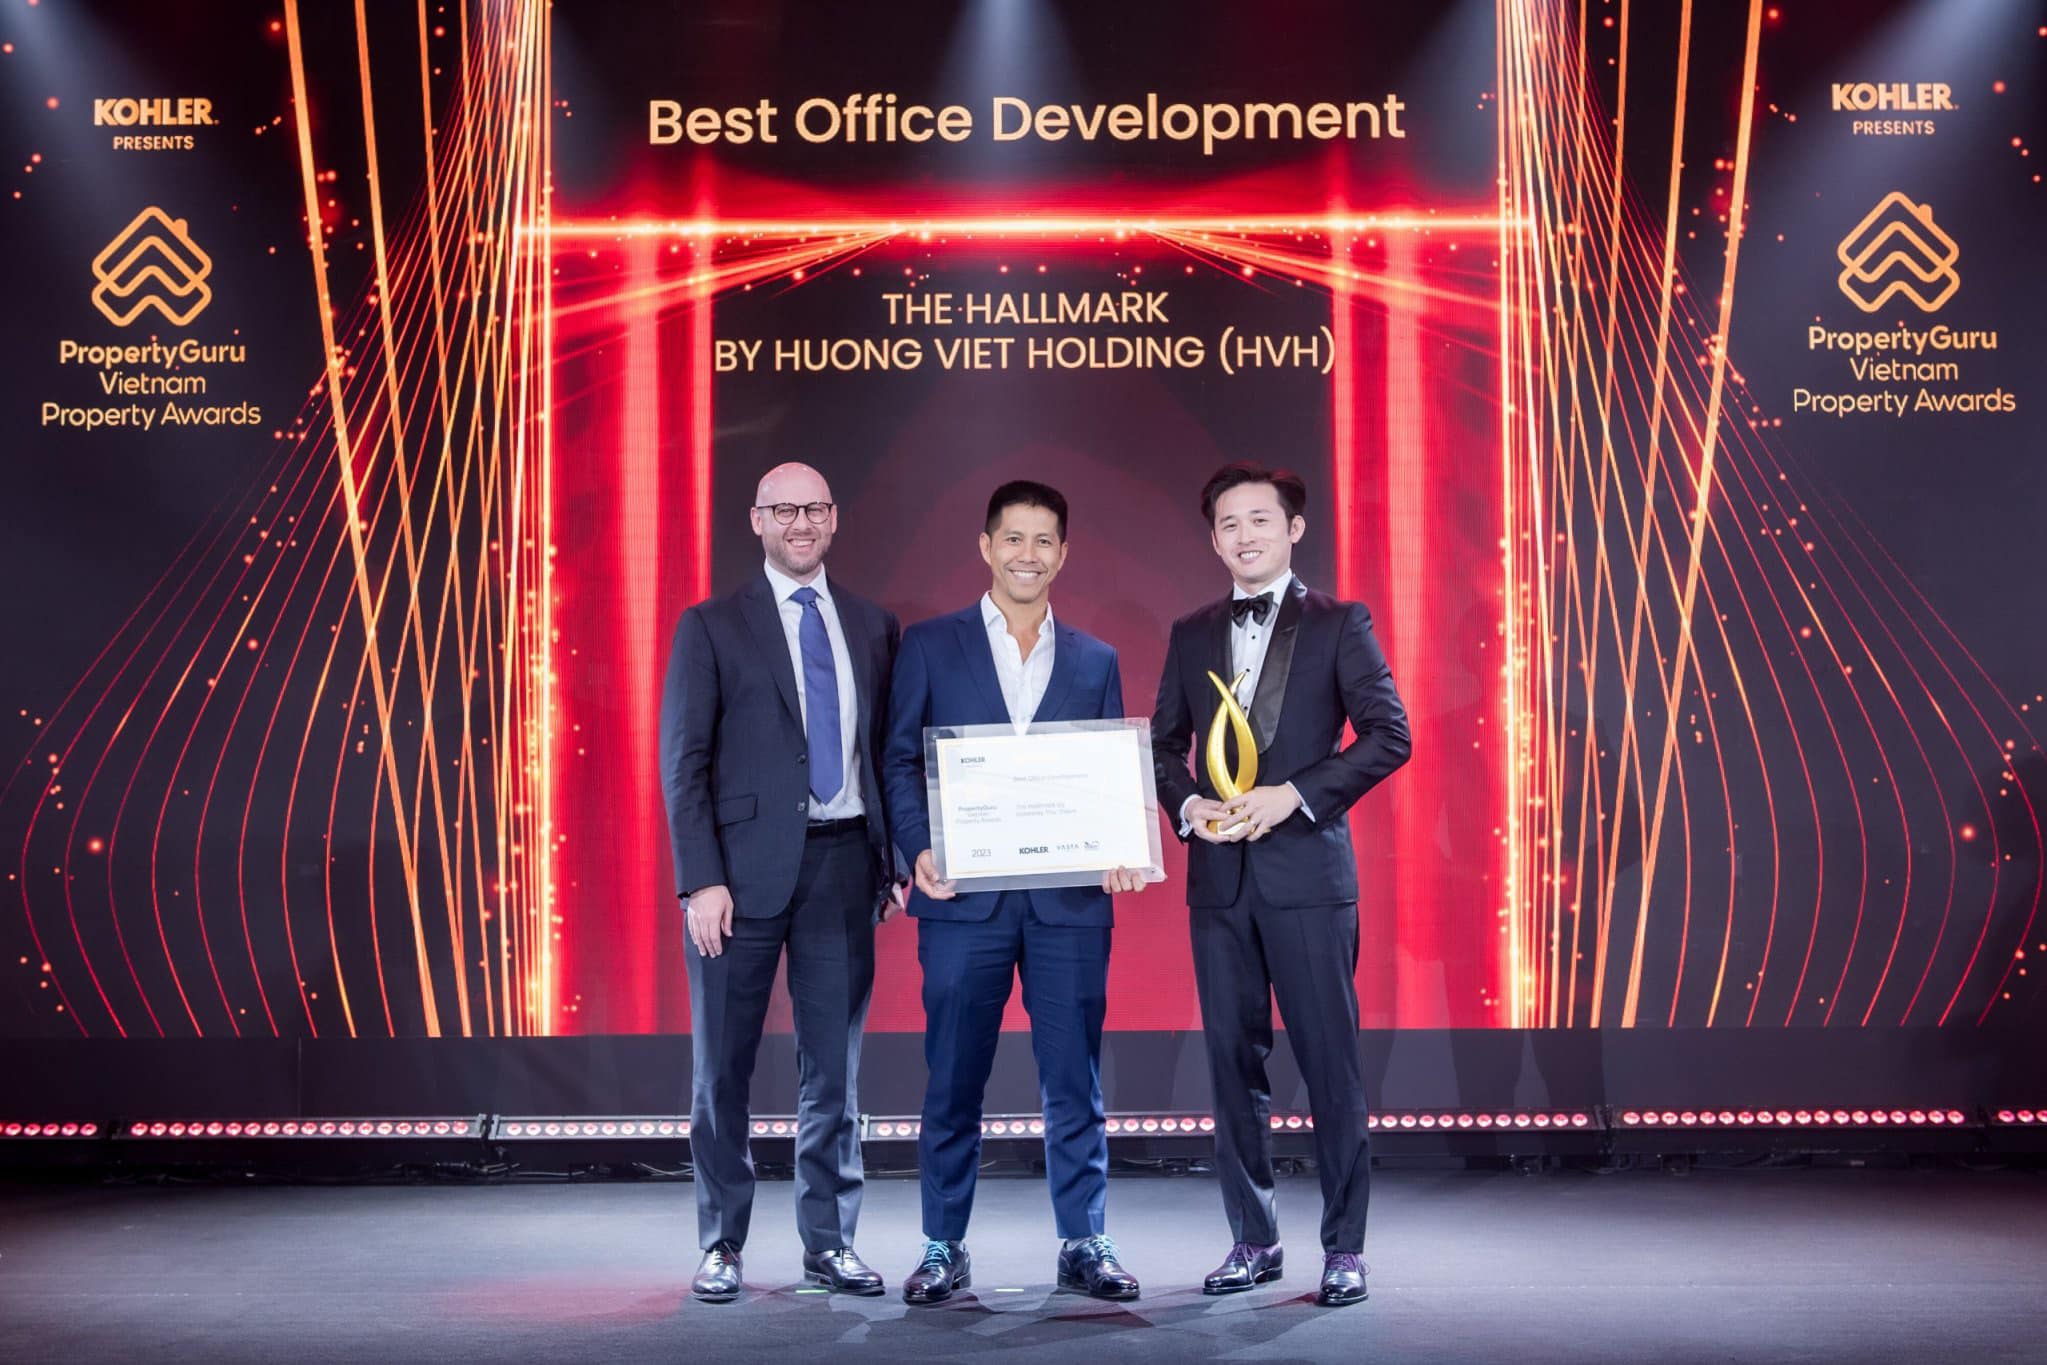 The Hallmark Honored as “Best Office Development”